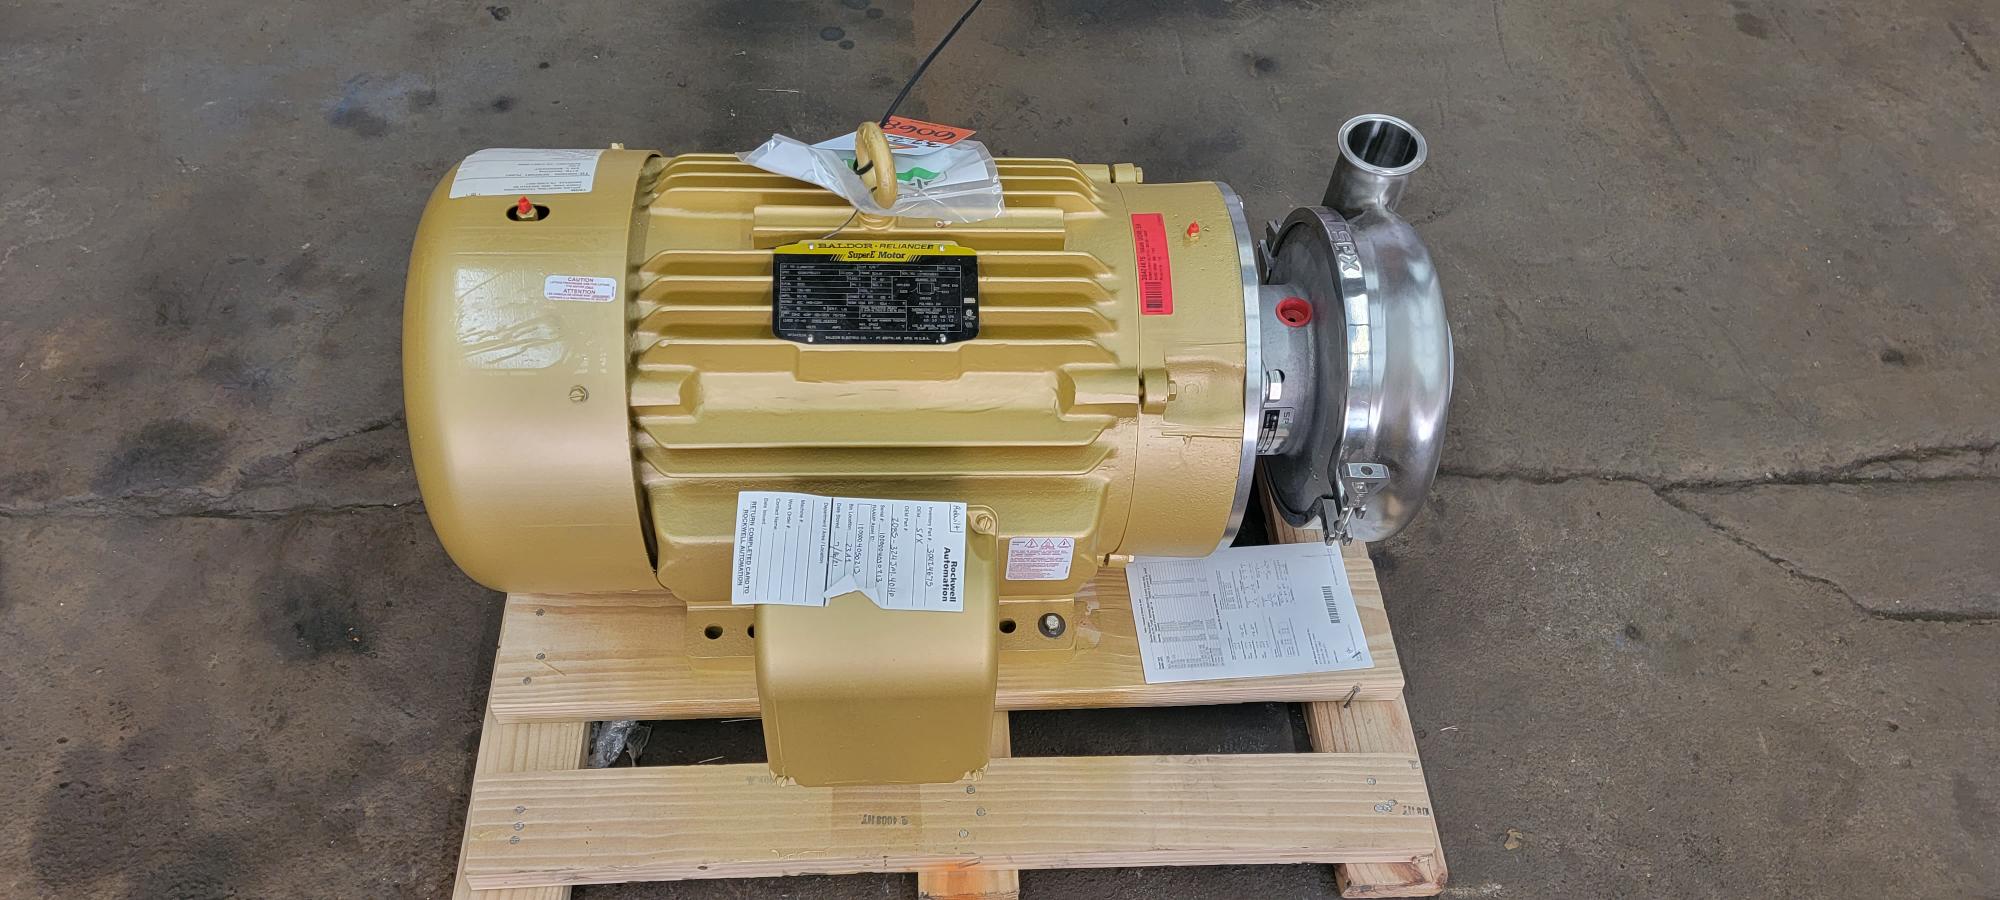 SPX Flow Centrifugal Pump Model 2085-324JM-40hp Rebuilt Condition